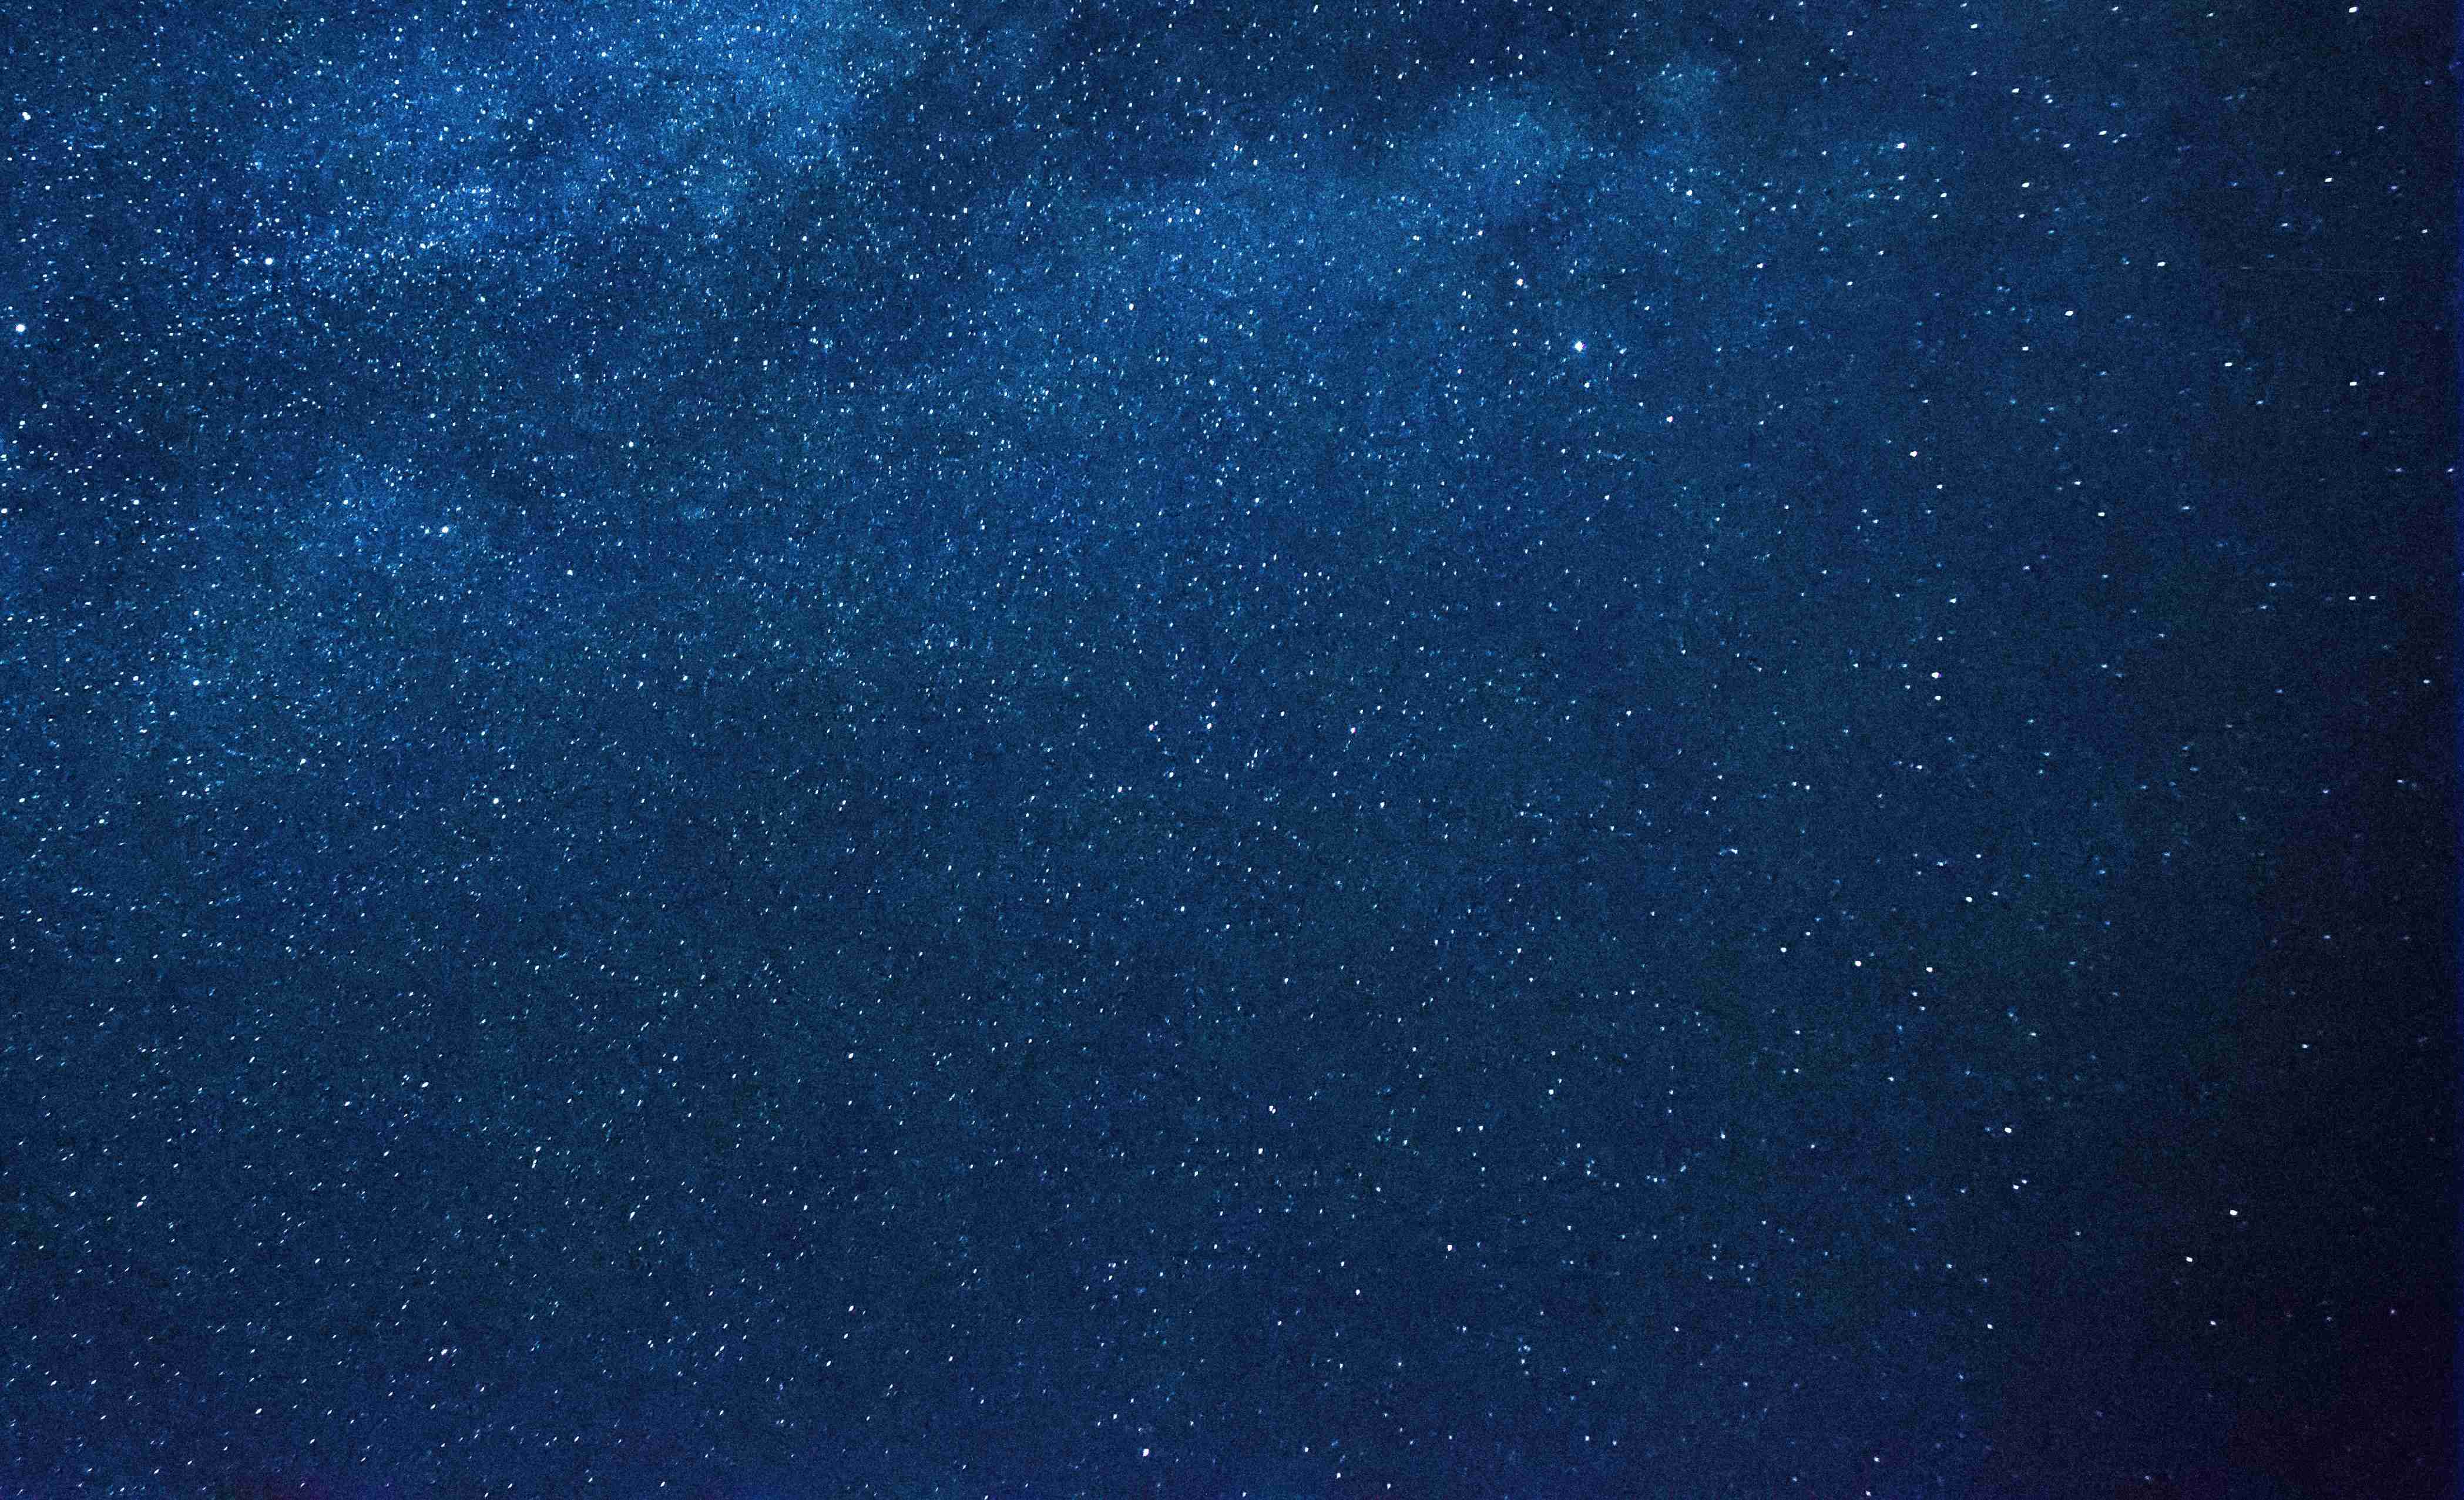 Dark blue sky with stars